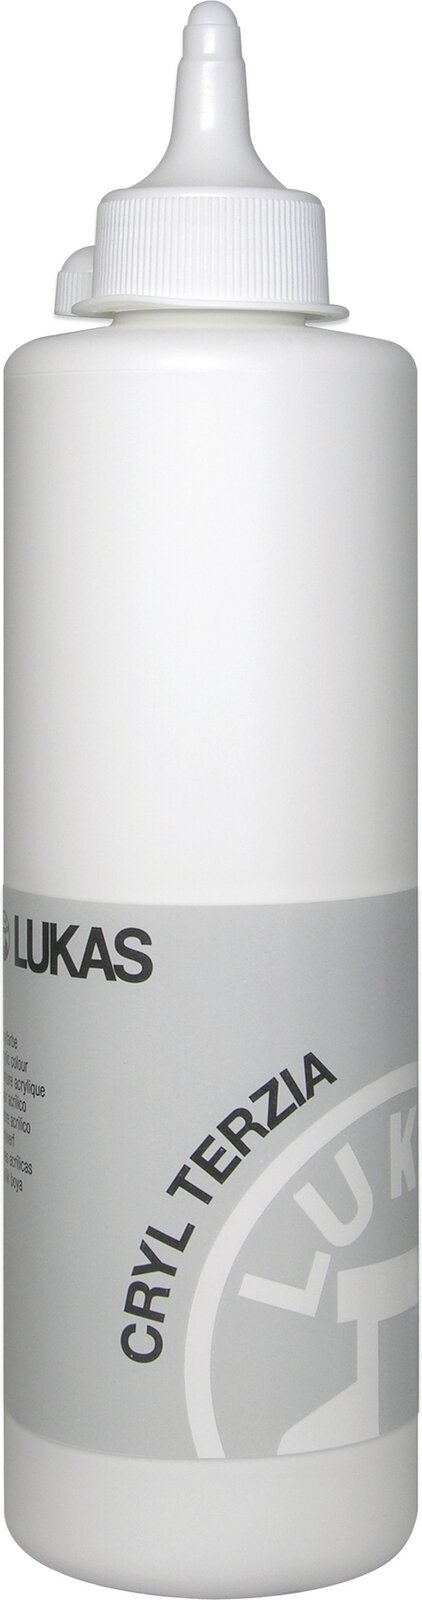 Akrilna barva Lukas Cryl Terzia Acrylic Paint Plastic Bottle Akrilna barva Titanium White 500 ml 1 kos